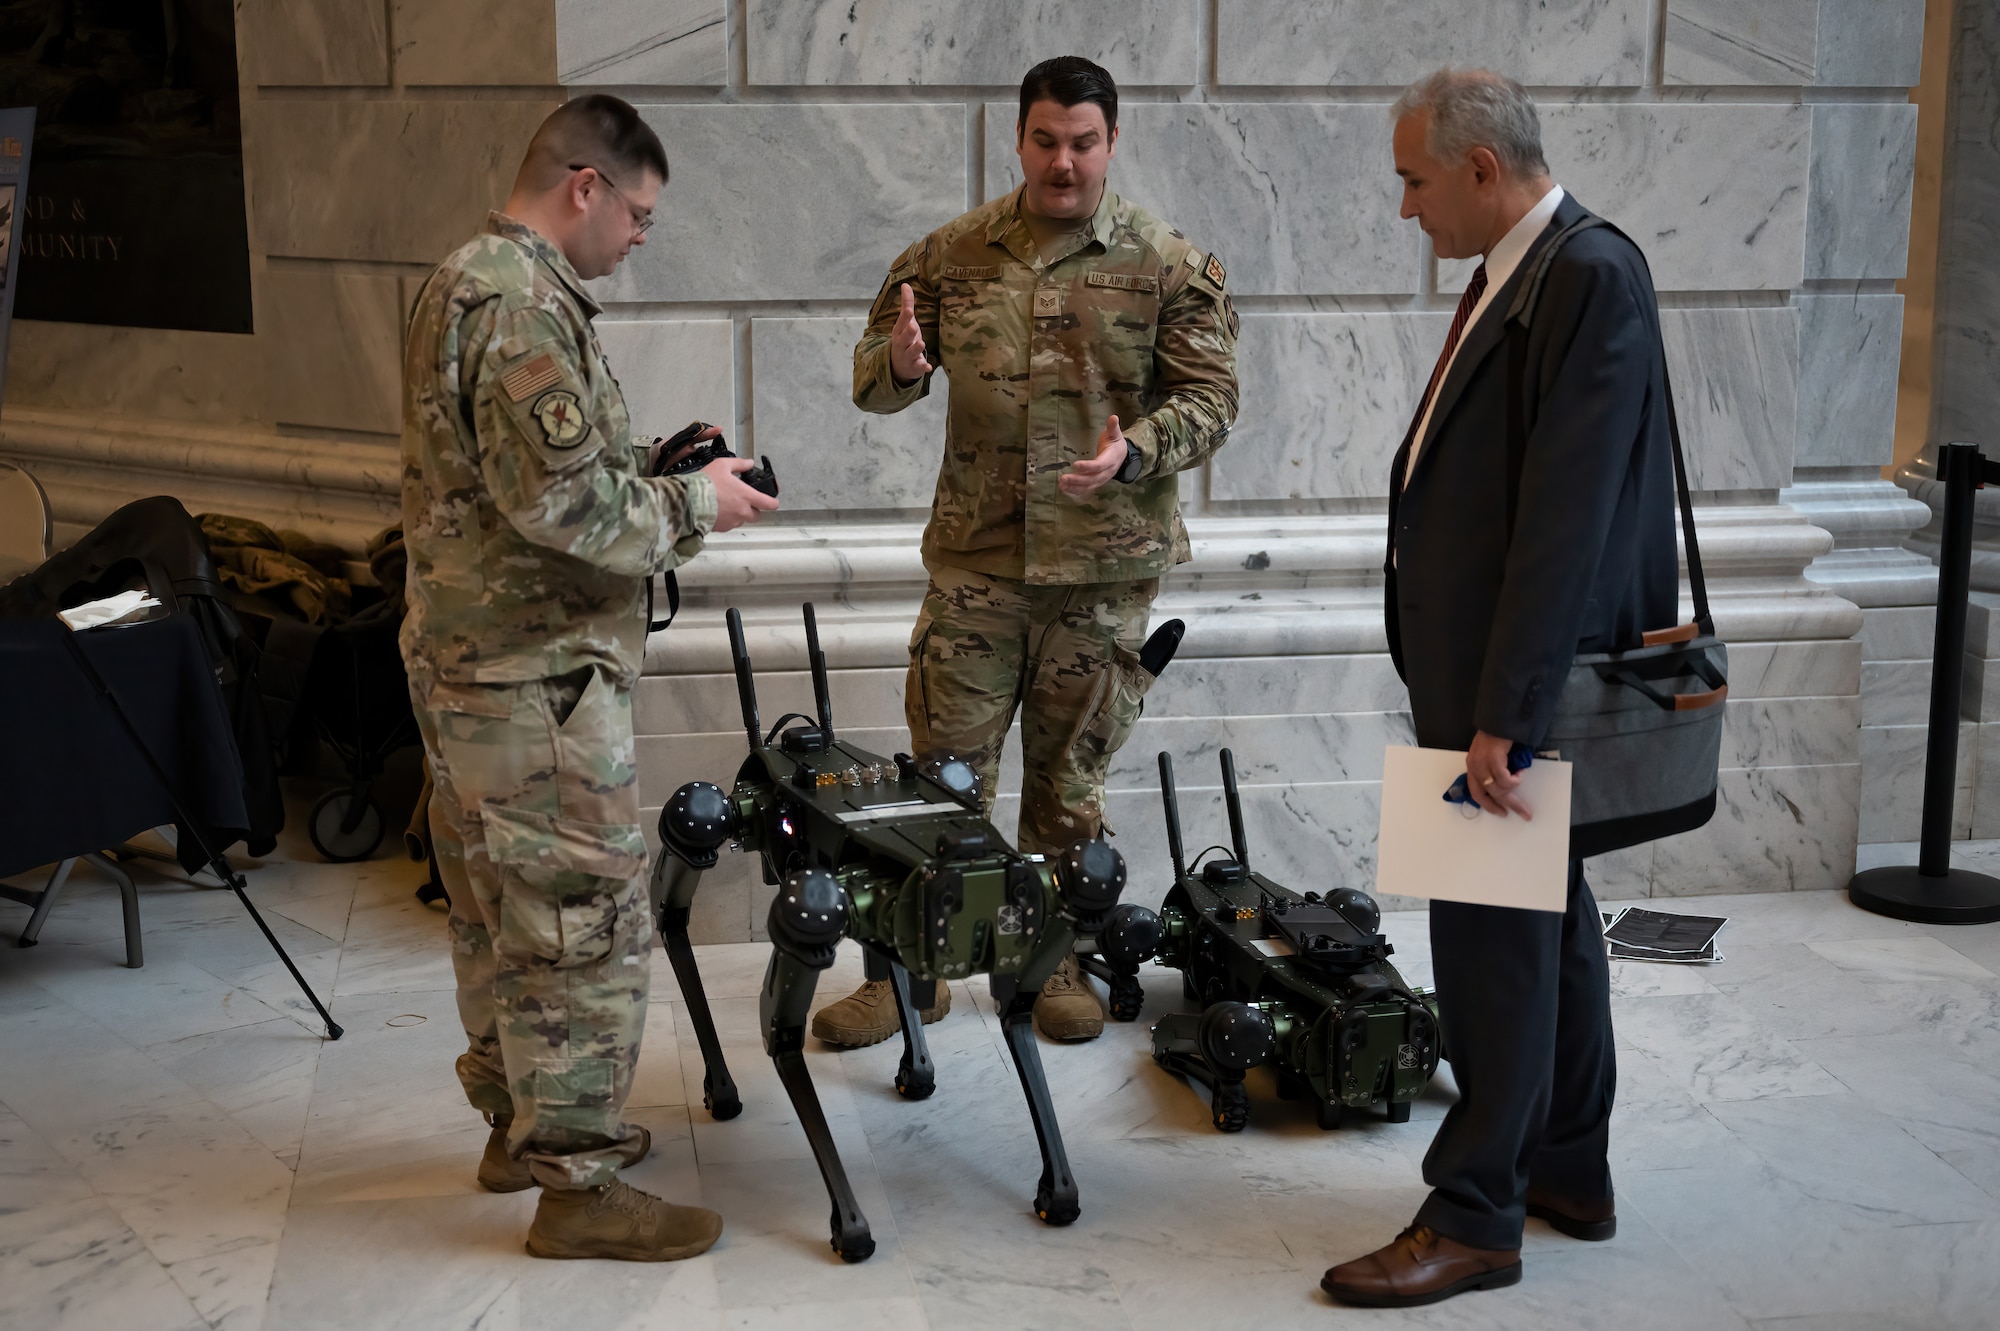 Utah legislators took some time to visit with military members during the Utah Defense Alliance’s annual Meet the Military breakfast at the Utah State Capitol Feb. 3, 2023.